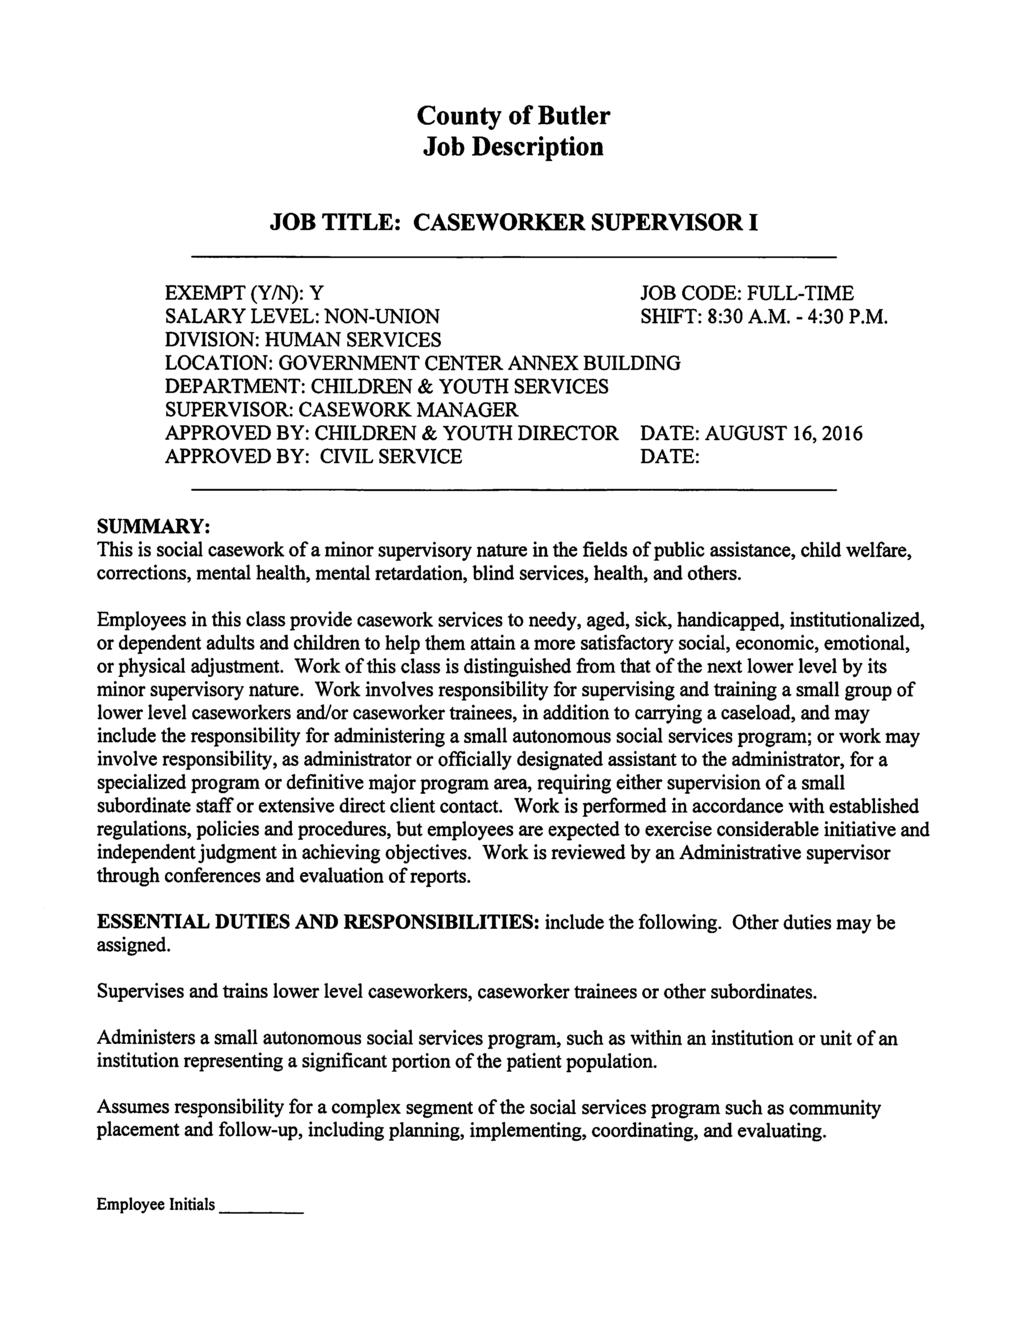 County ofbutler Job Description JOB TITLE: CASEWORKER SUPERVISOR I EXEMPT (Y/N): Y SALARY LEVEL: NON-UNION DIVISION: HUMAN SERVICES LOCATION: GOVERNMENT CENTER ANNEX BUILDING DEPARTMENT: CHILDREN &